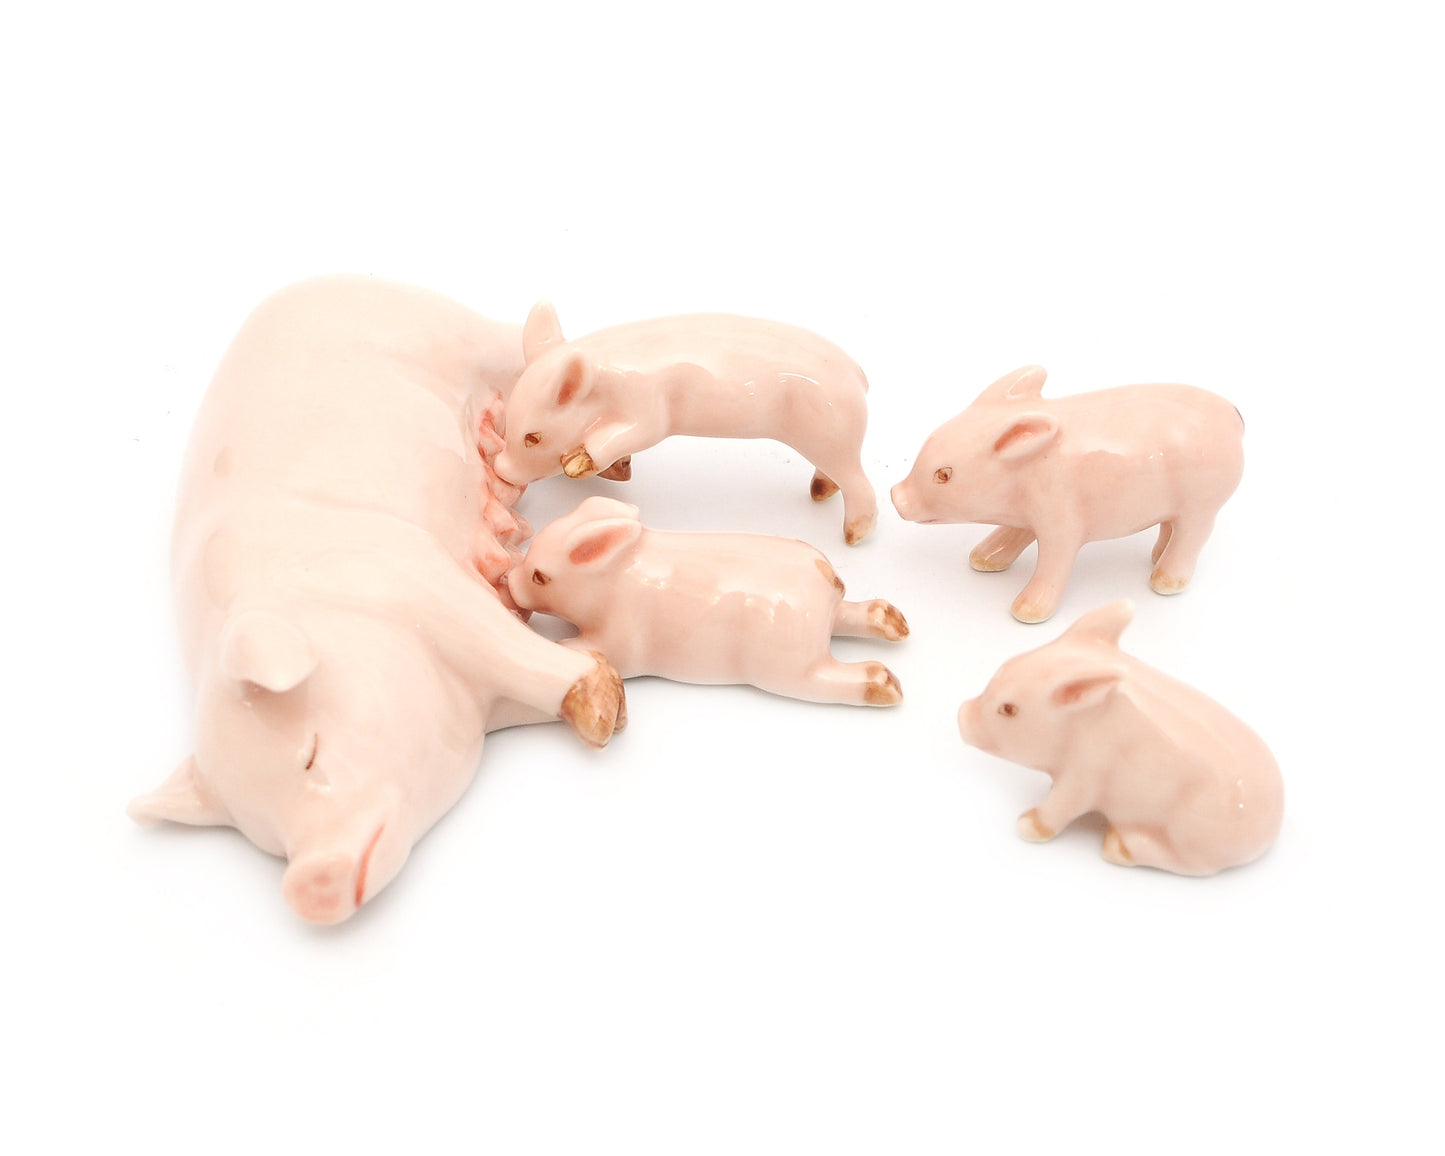 Handmade Miniatures Ceramic Pig Family Figurine Animals Decor/Animal Collection